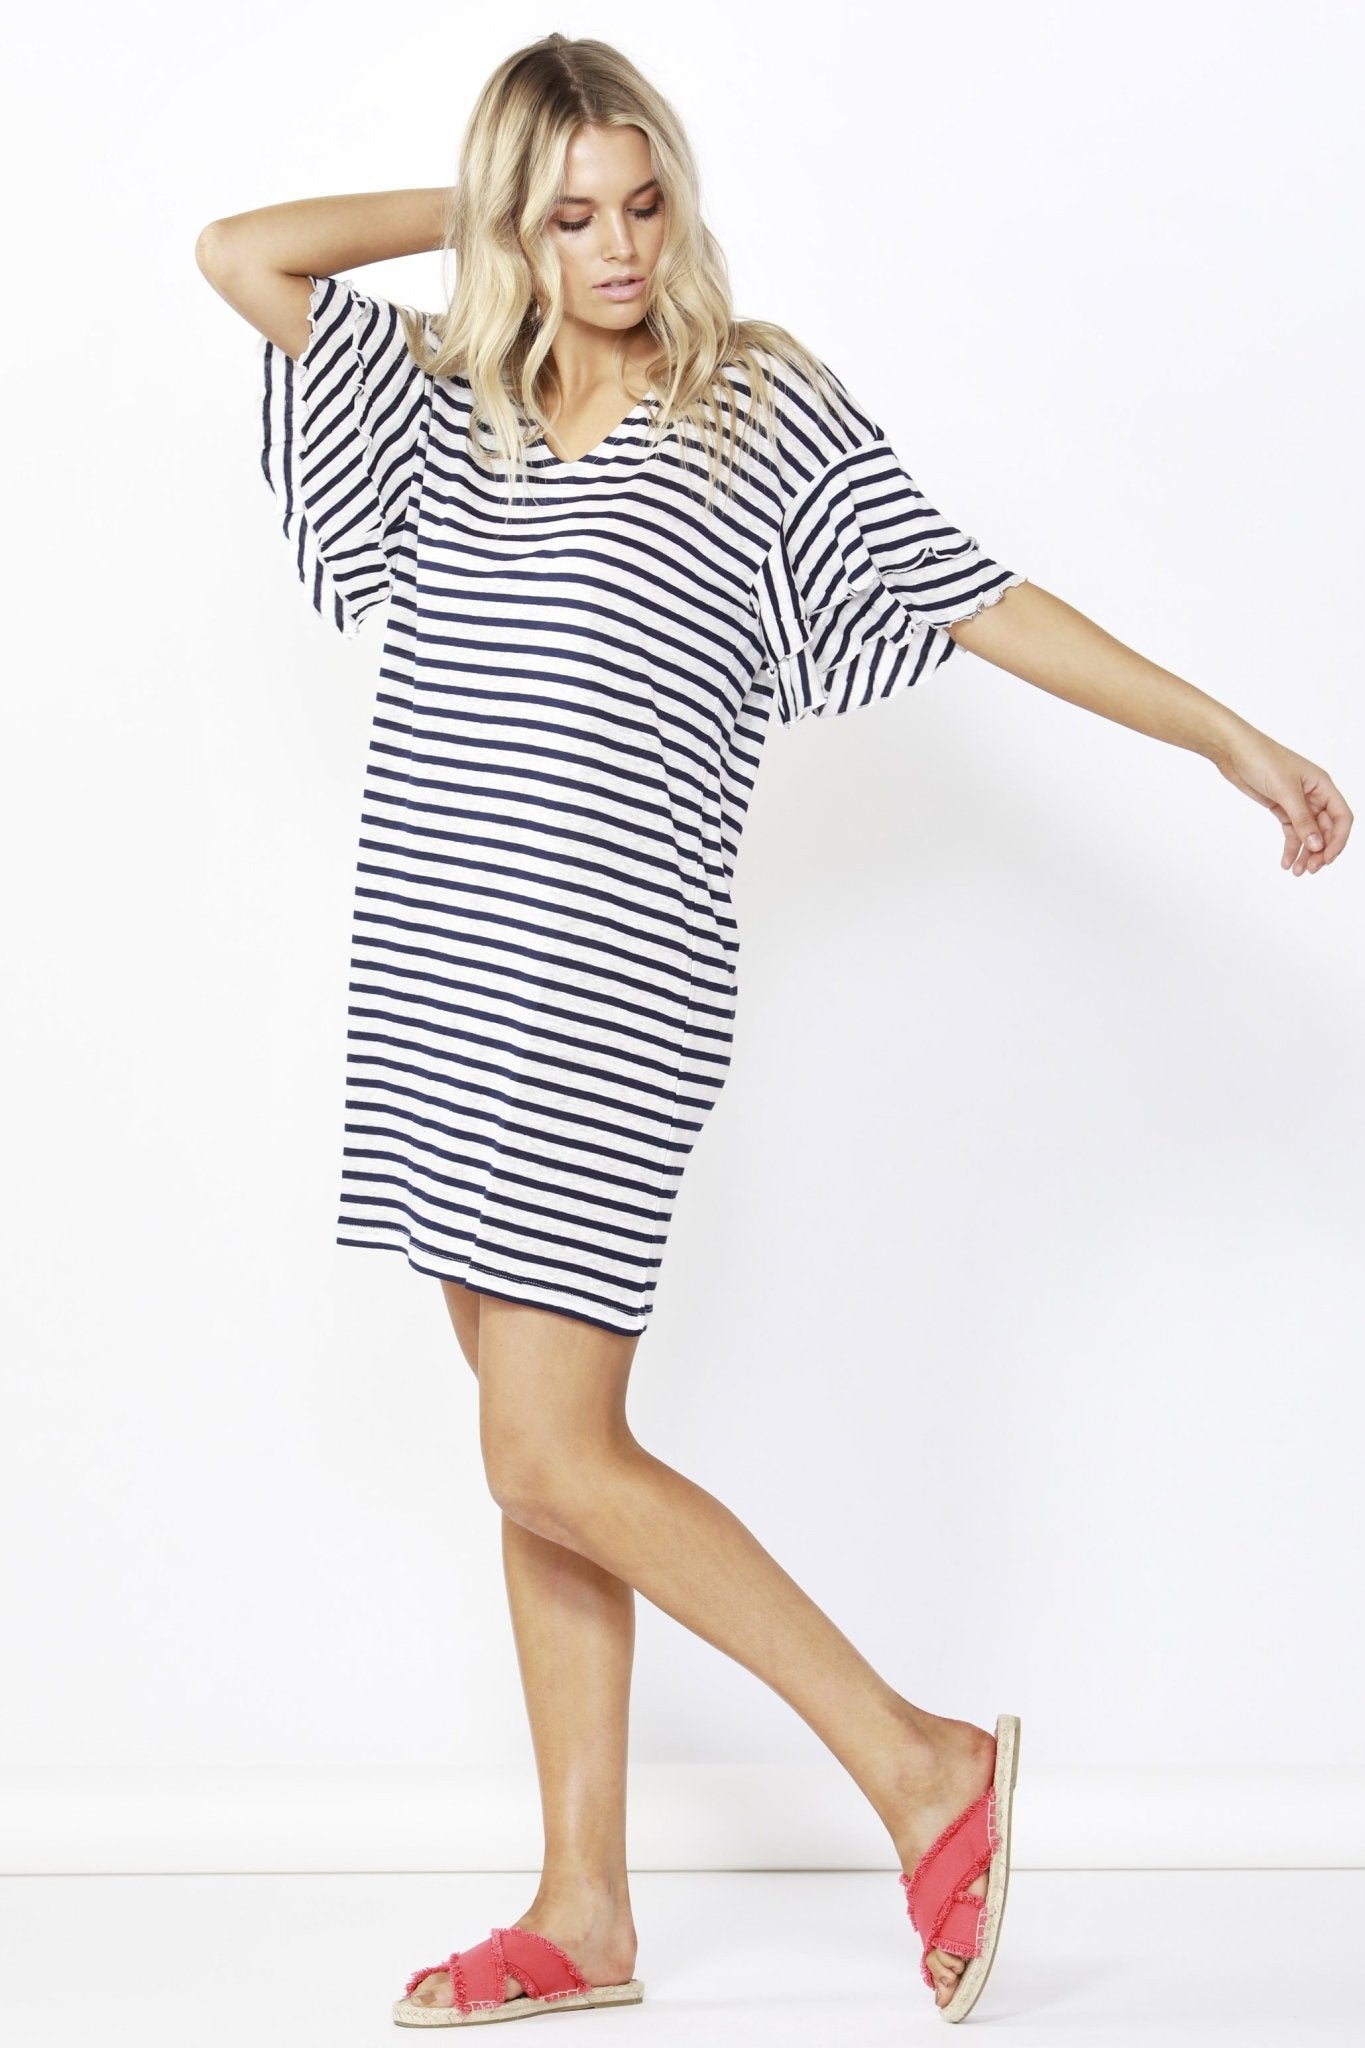 Betty Basics Sydney Dress in Ink Stripe Size 8 Only - Hey Sara